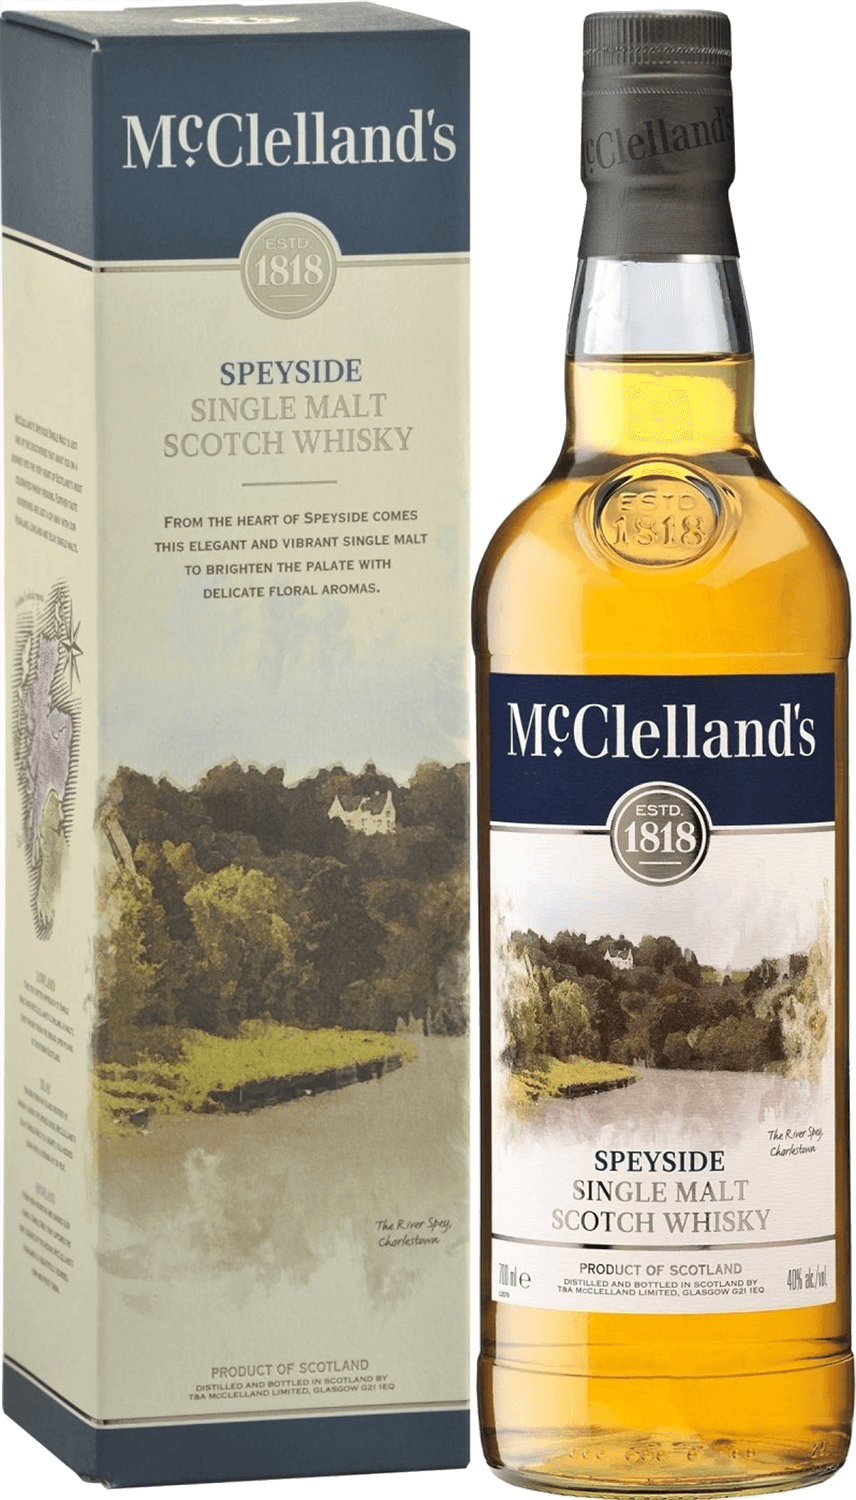 McClelland's Speyside single malt scotch whisky (gift box) old ballantruan speyside glenlivet single malt scotch whisky gift box